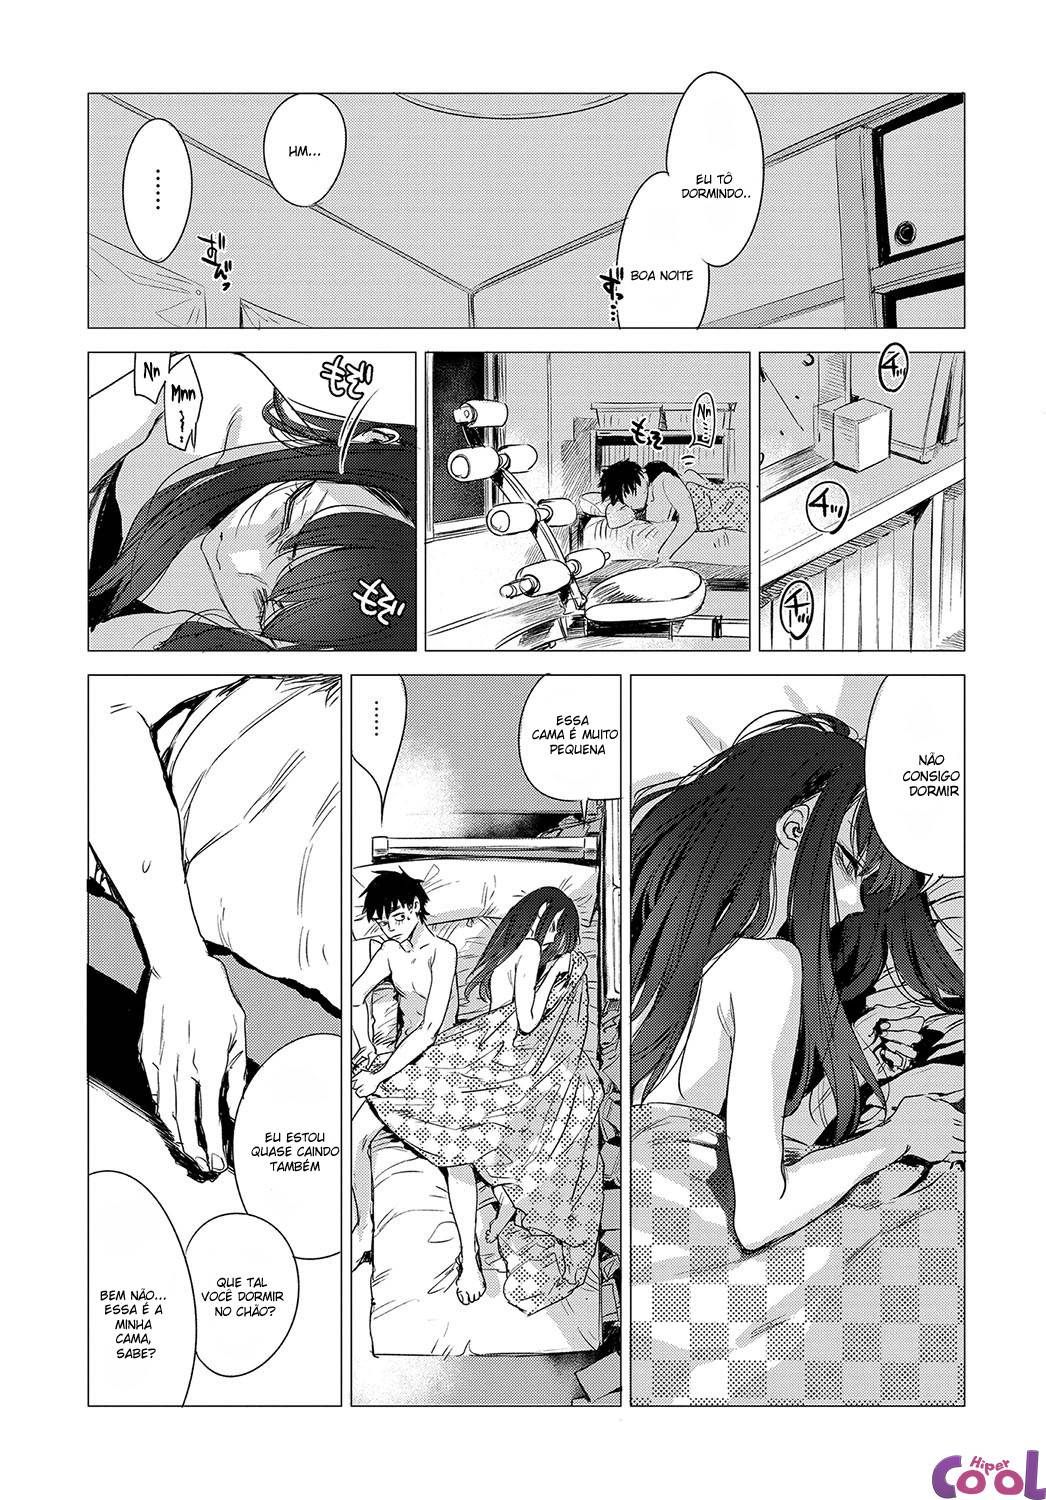 kanojo-no-himitsu-ii-chapter-01-page-19.jpg